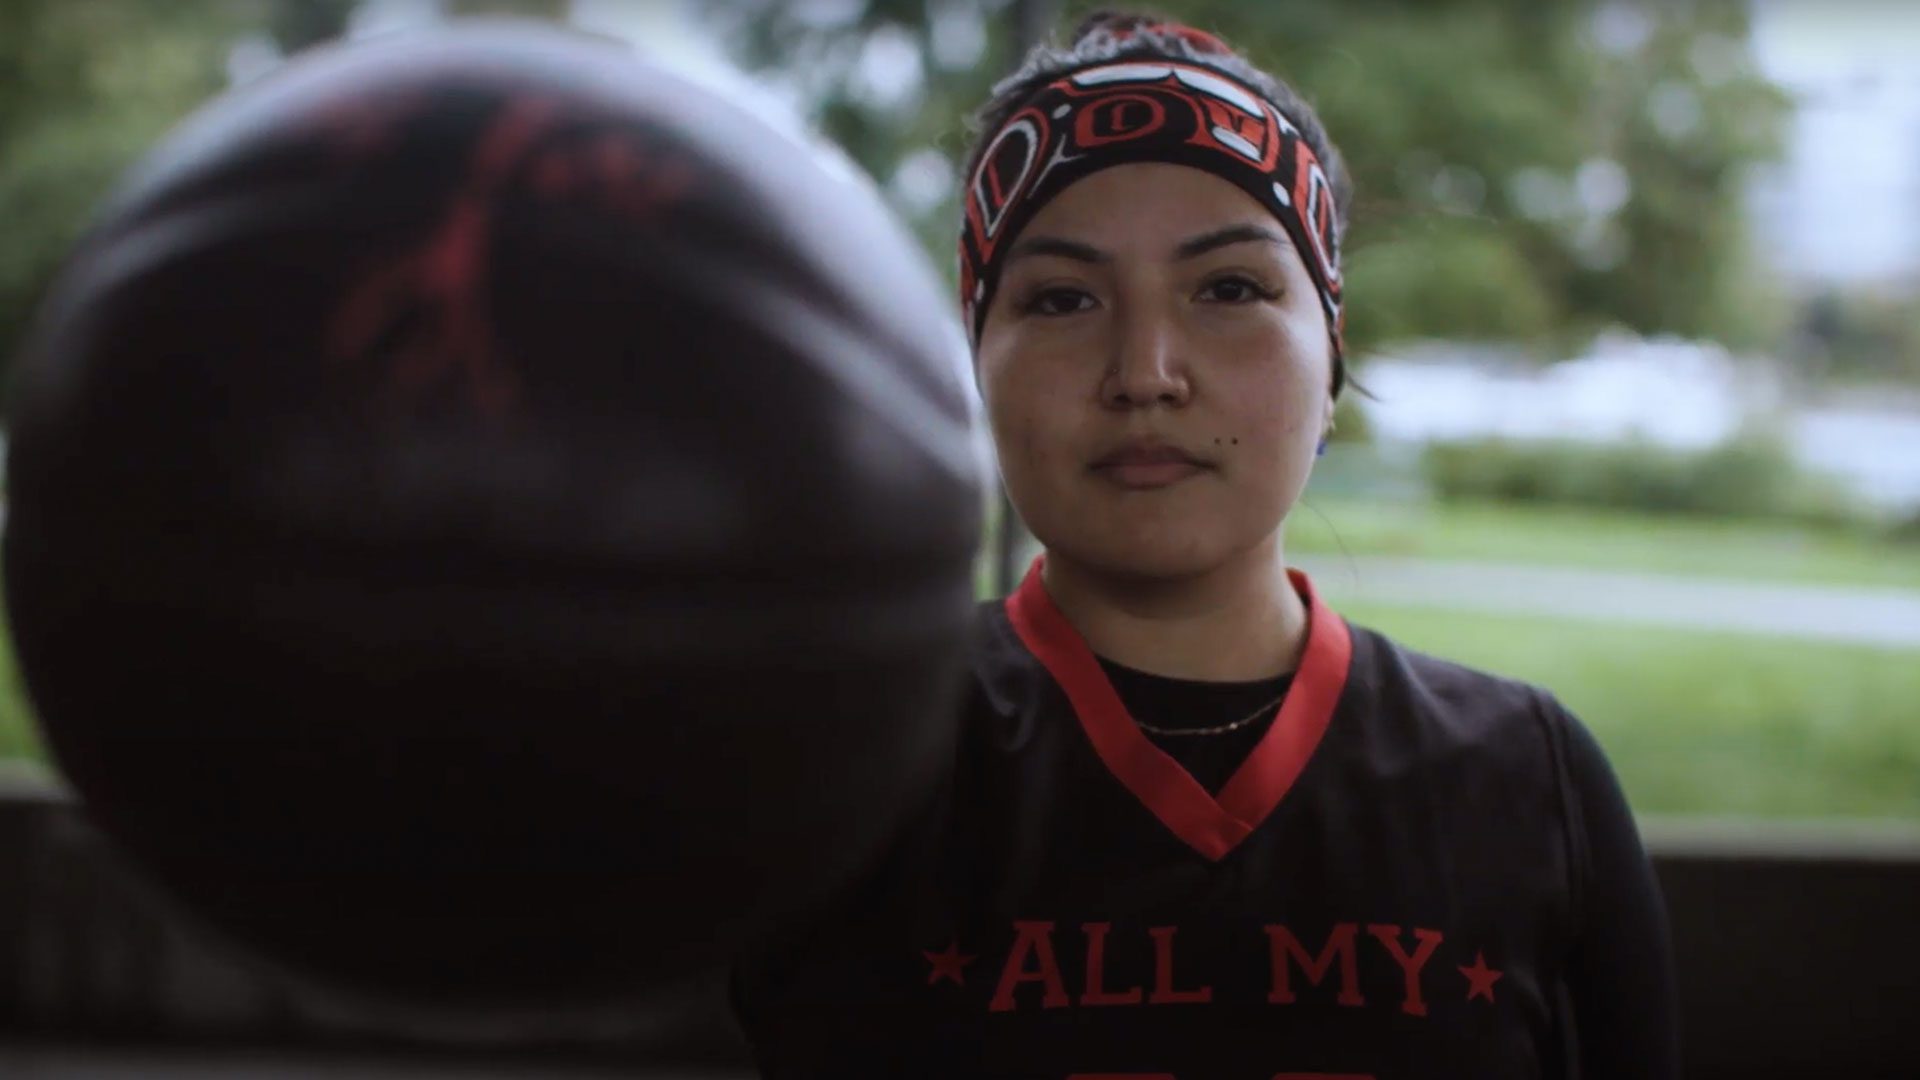 Indigenous women's basketball